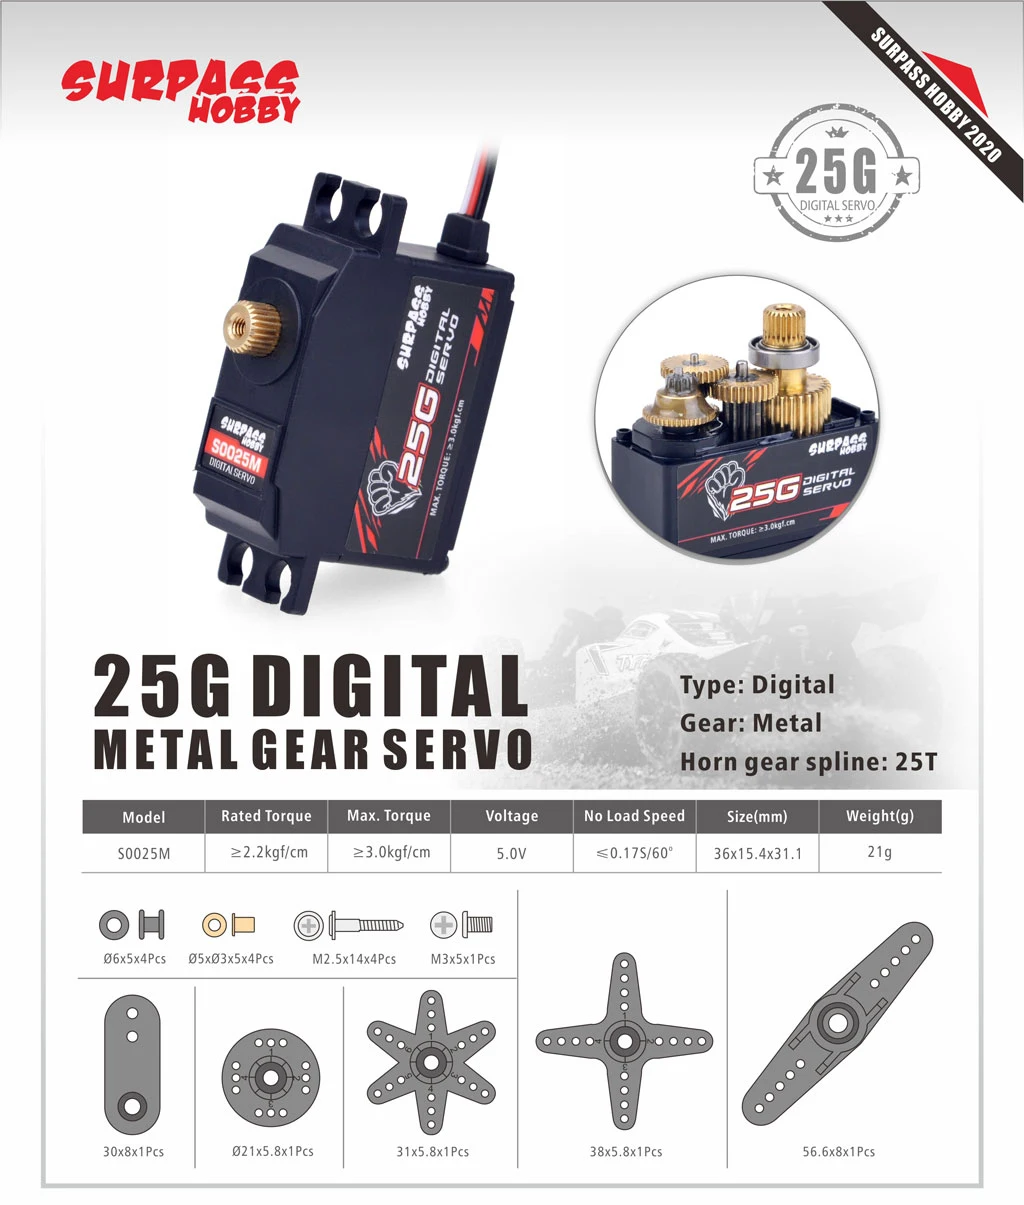 SURPASS HOBBY 25G Metal Gear Servo 3KG Torque Digital Motor for Airplane Robot 1/12 RC Monster Car 12428 Boat Model Accesorries